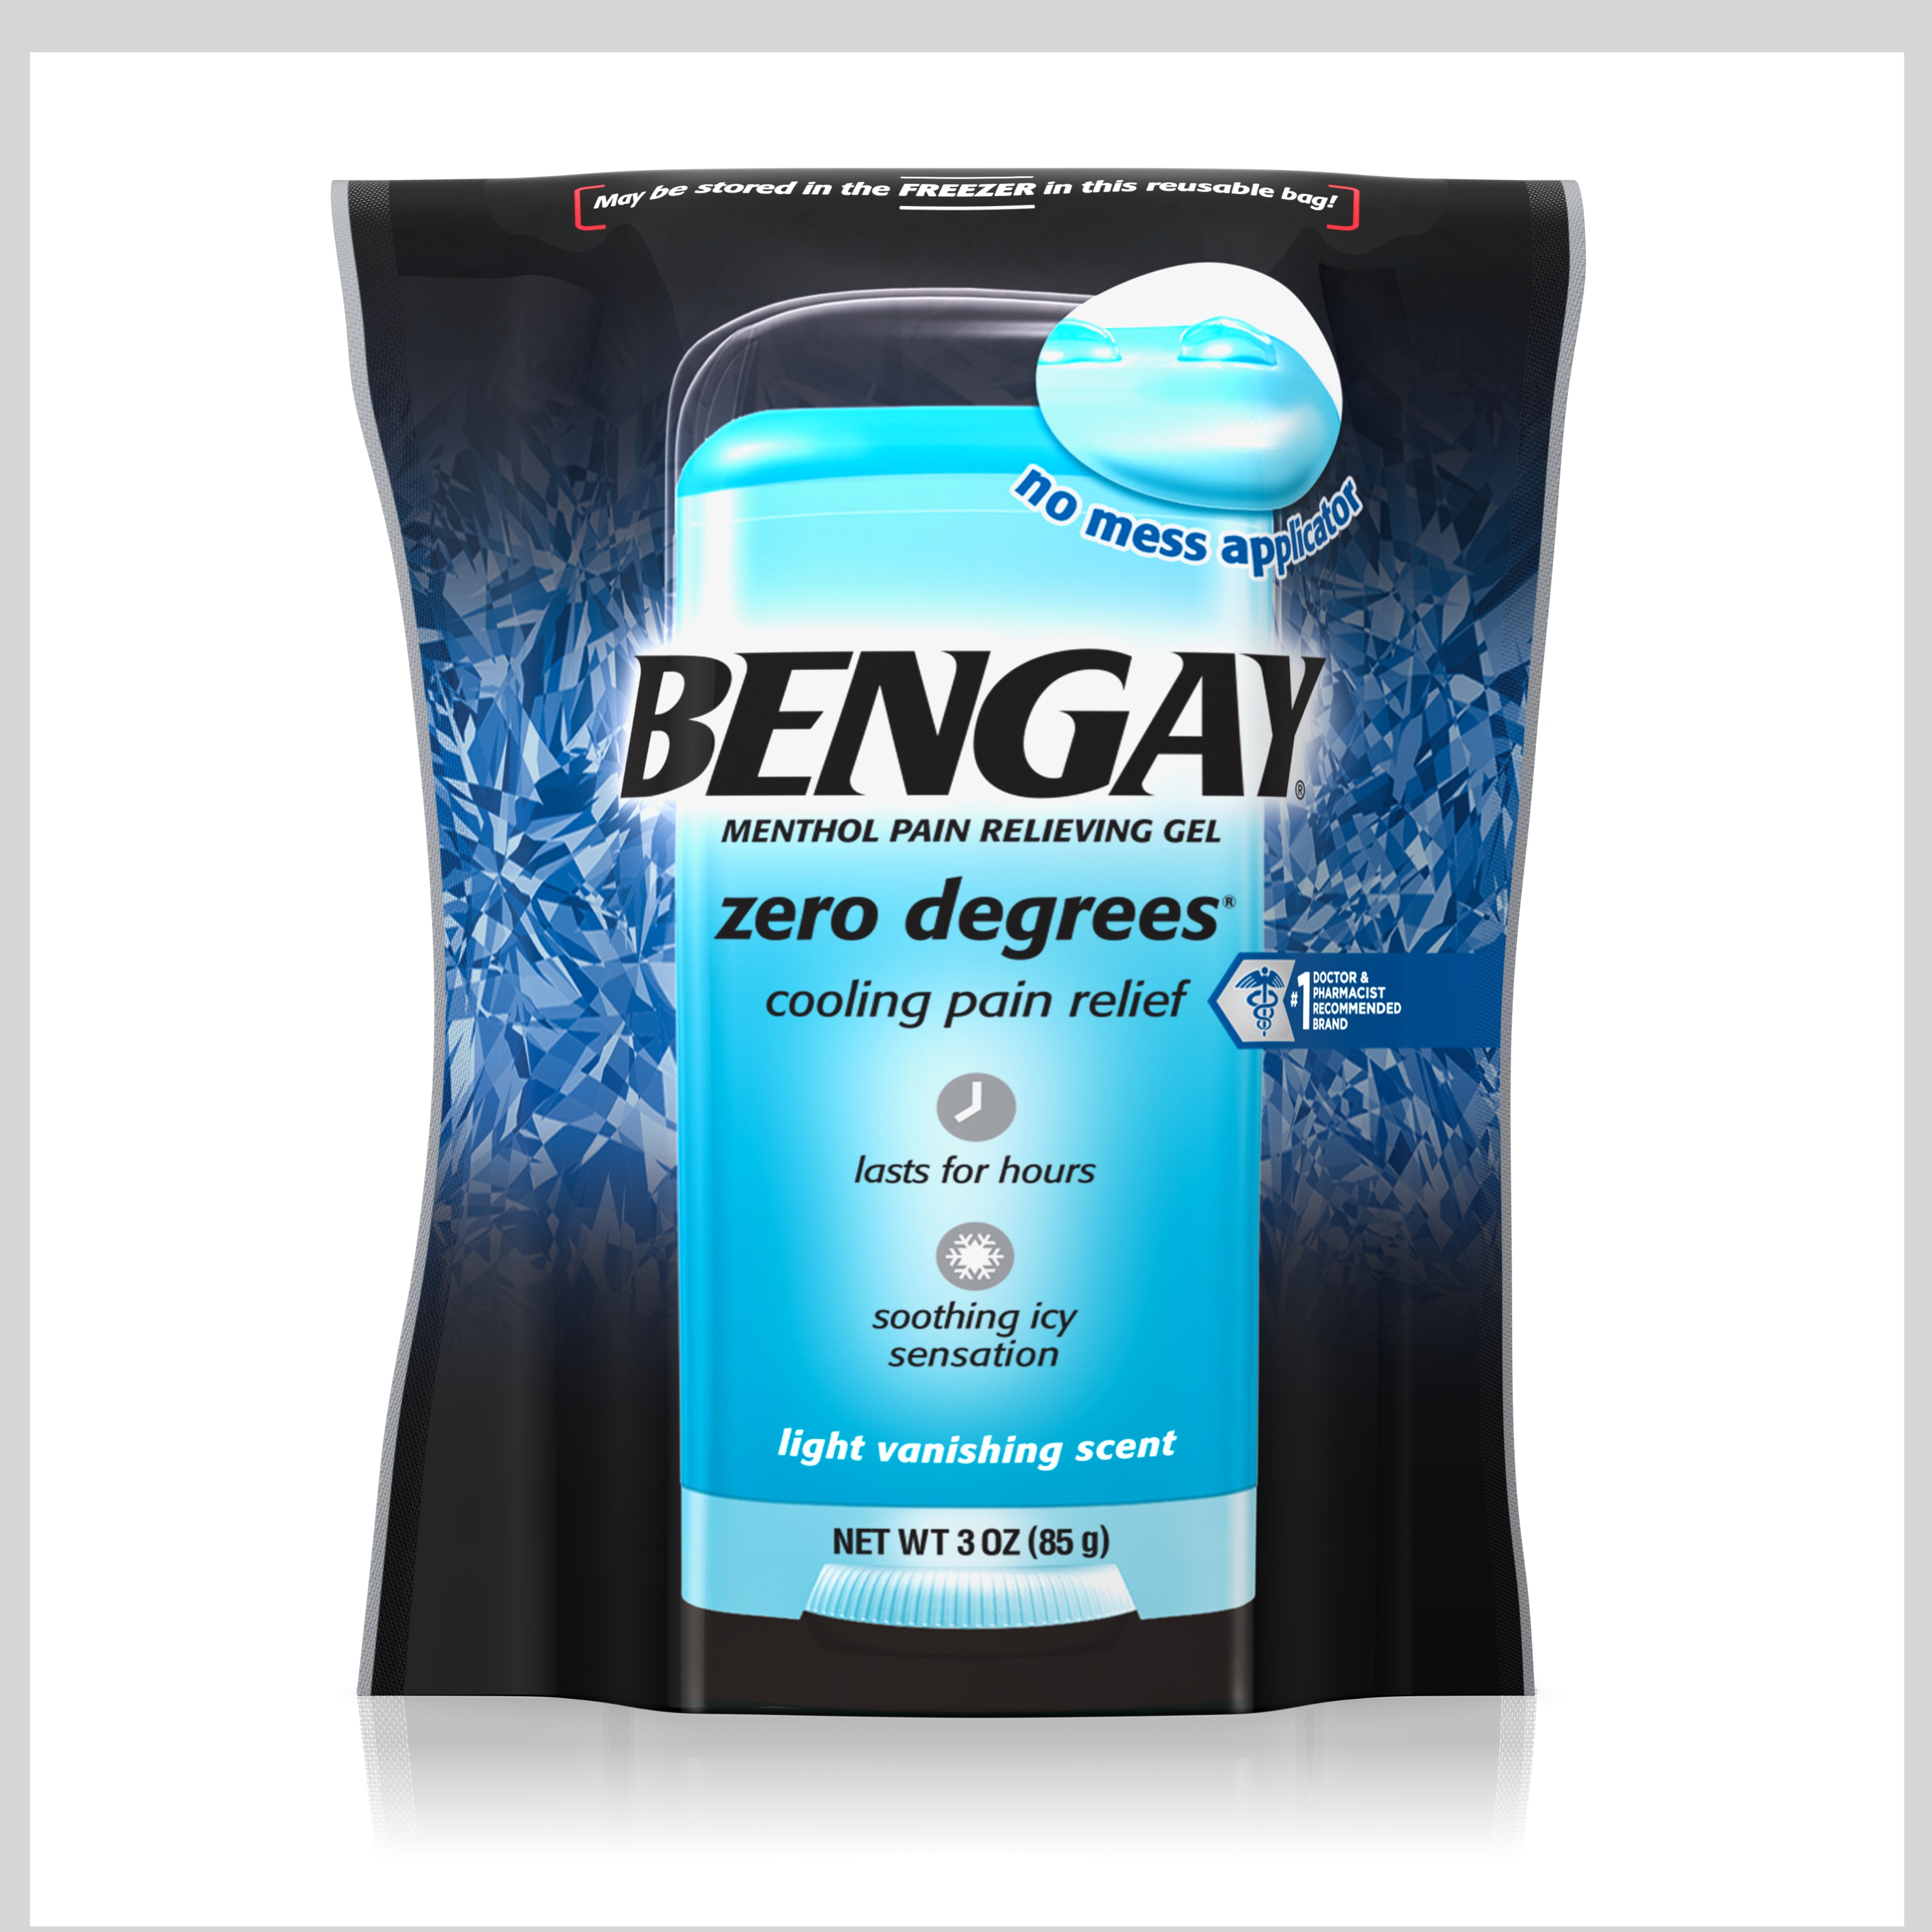 Bengay Zero Degrees Vanishing Scent Menthol Pain Relieving Gel, 3 Oz - image 1 of 6